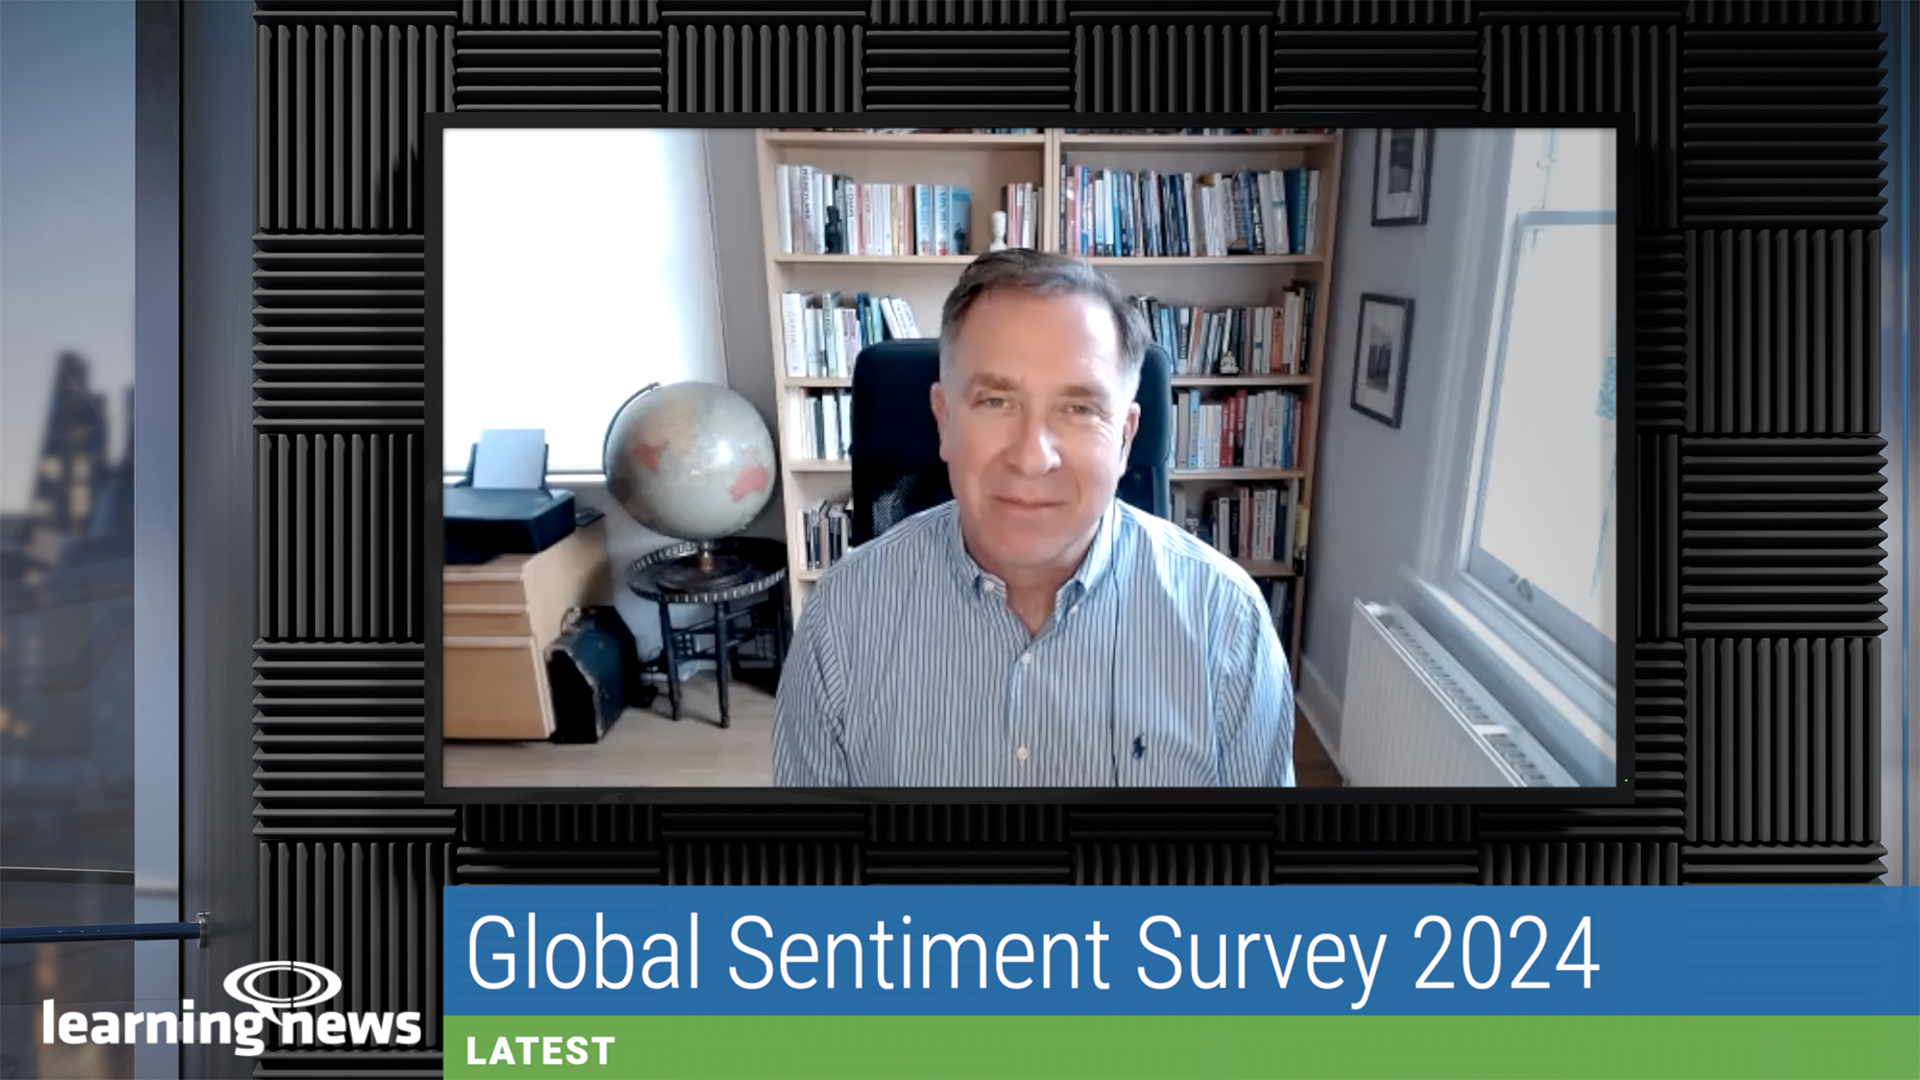 Donald H Taylor opens the annual sentiment survey for L&D